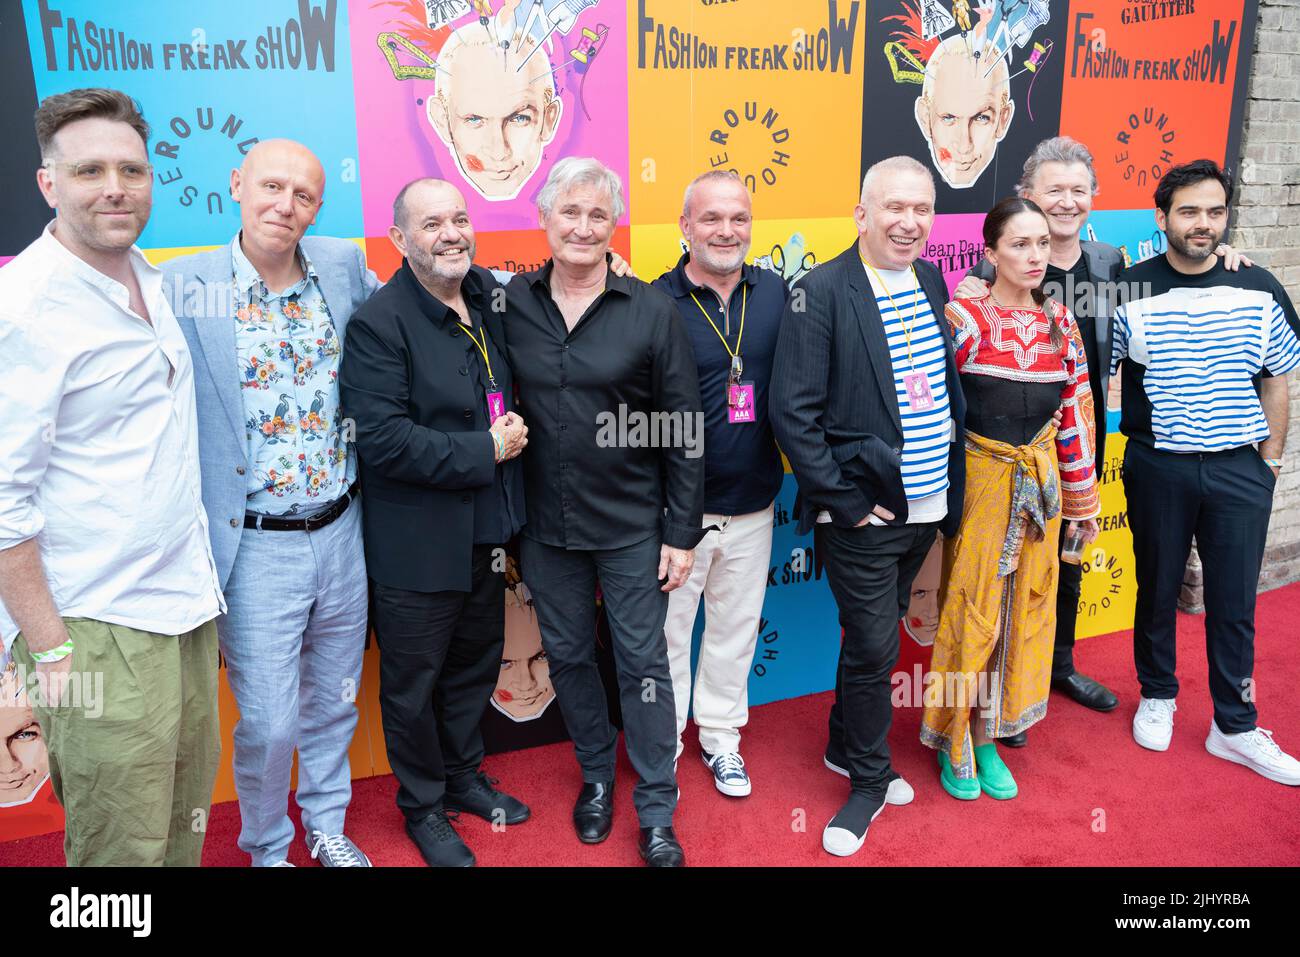 The team; Jean Paul Gaultier and choreographer Marion Motin, David  Shepherd, Garry McQuinn, Thierry Suc behind 'Fashion Freak Show unite on  the red carpet. 'Jean Paul Gaultier's Fashion Freak Show' has taken